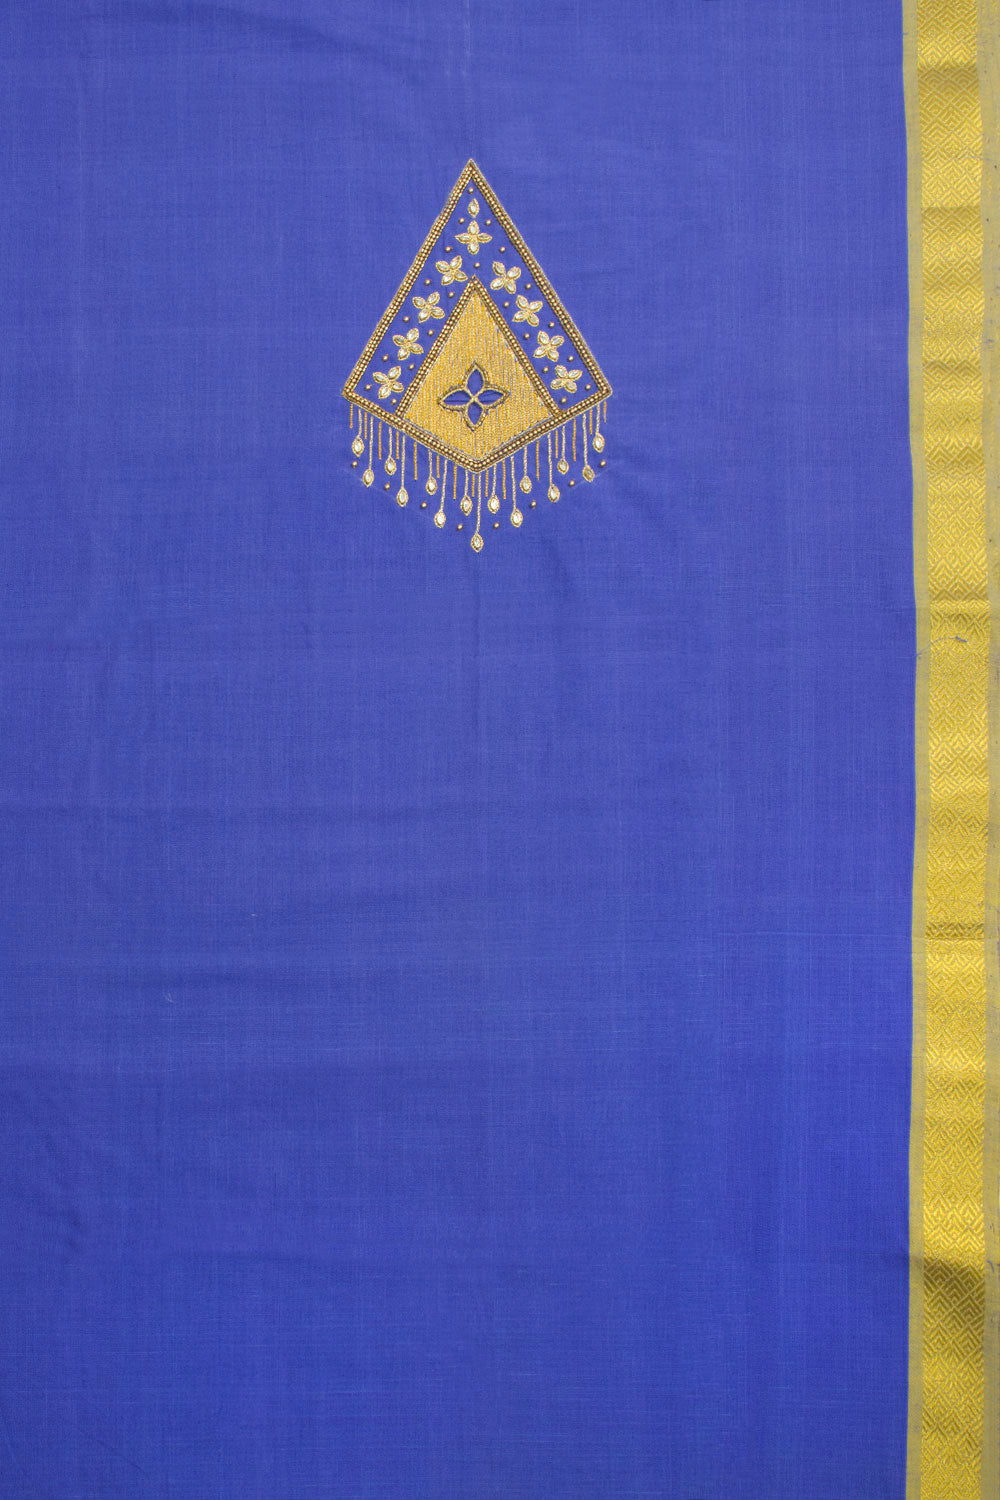 Dusky Blue Aari Embroidered Mangalgiri Cotton Blouse Material 10062443